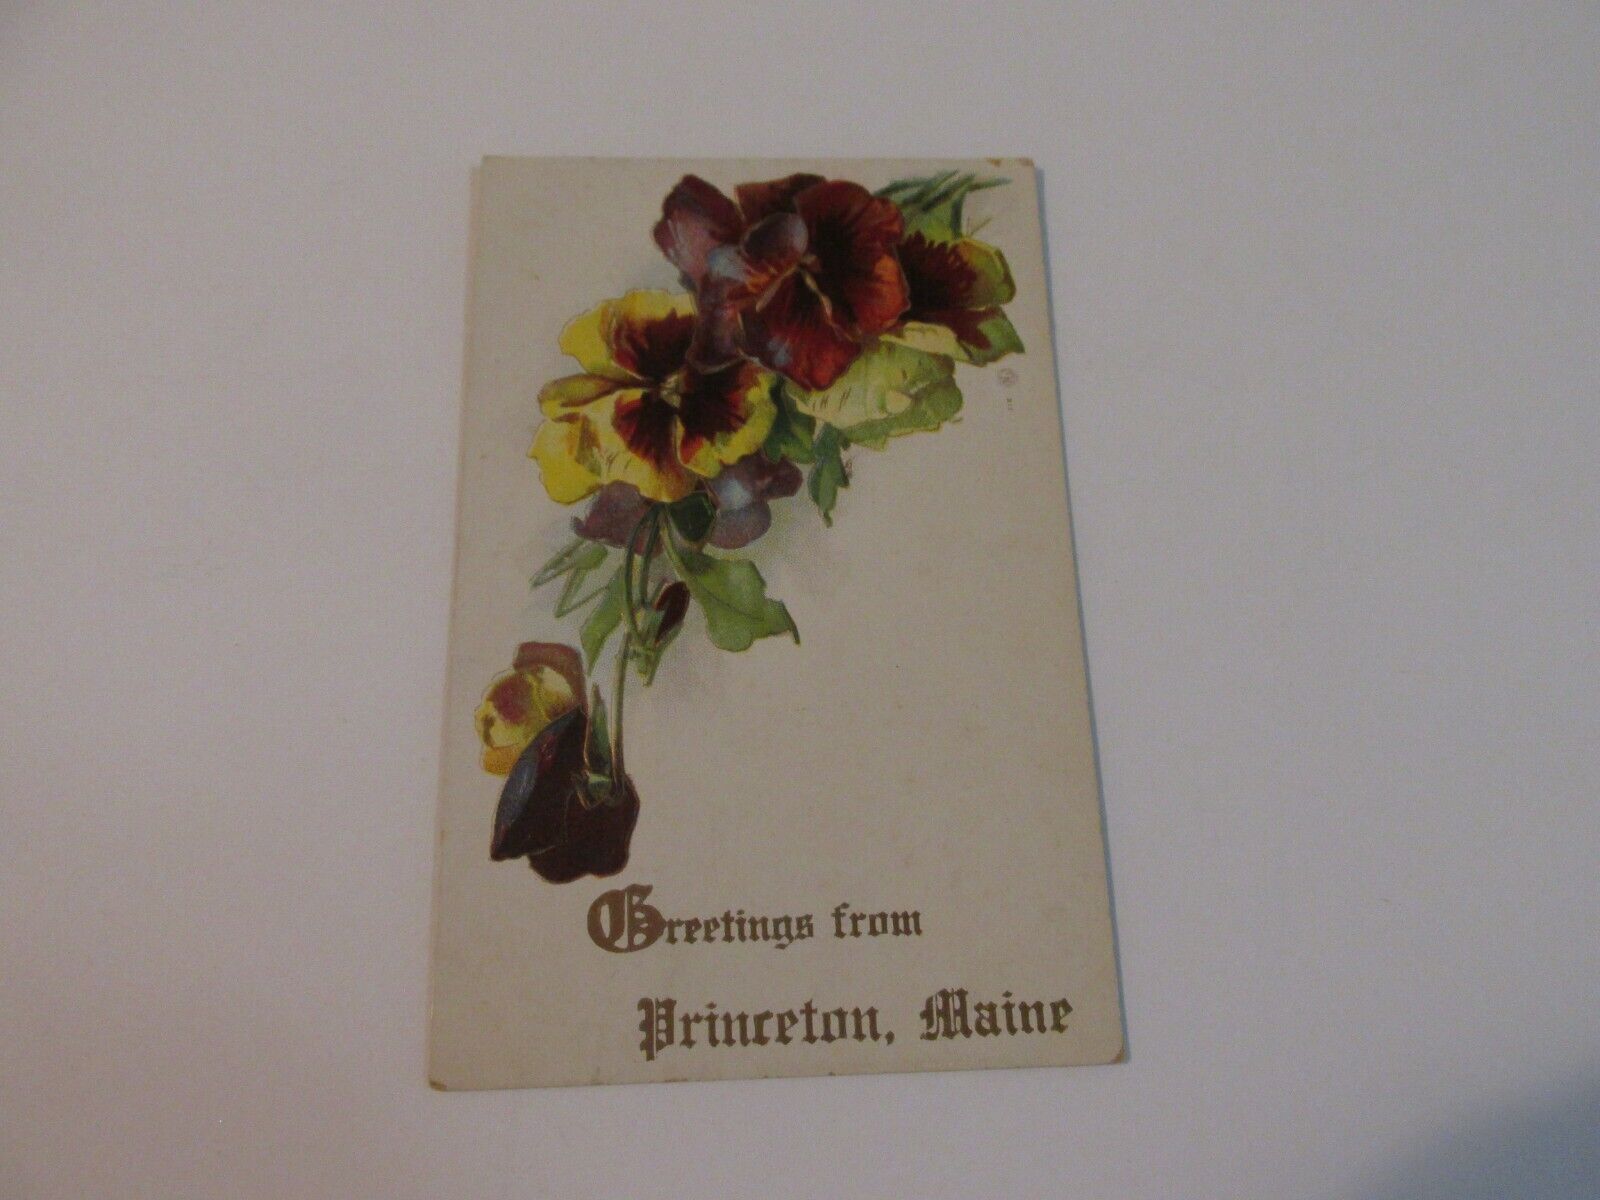 Antique Postcard, Princeton, Maine, Flowers